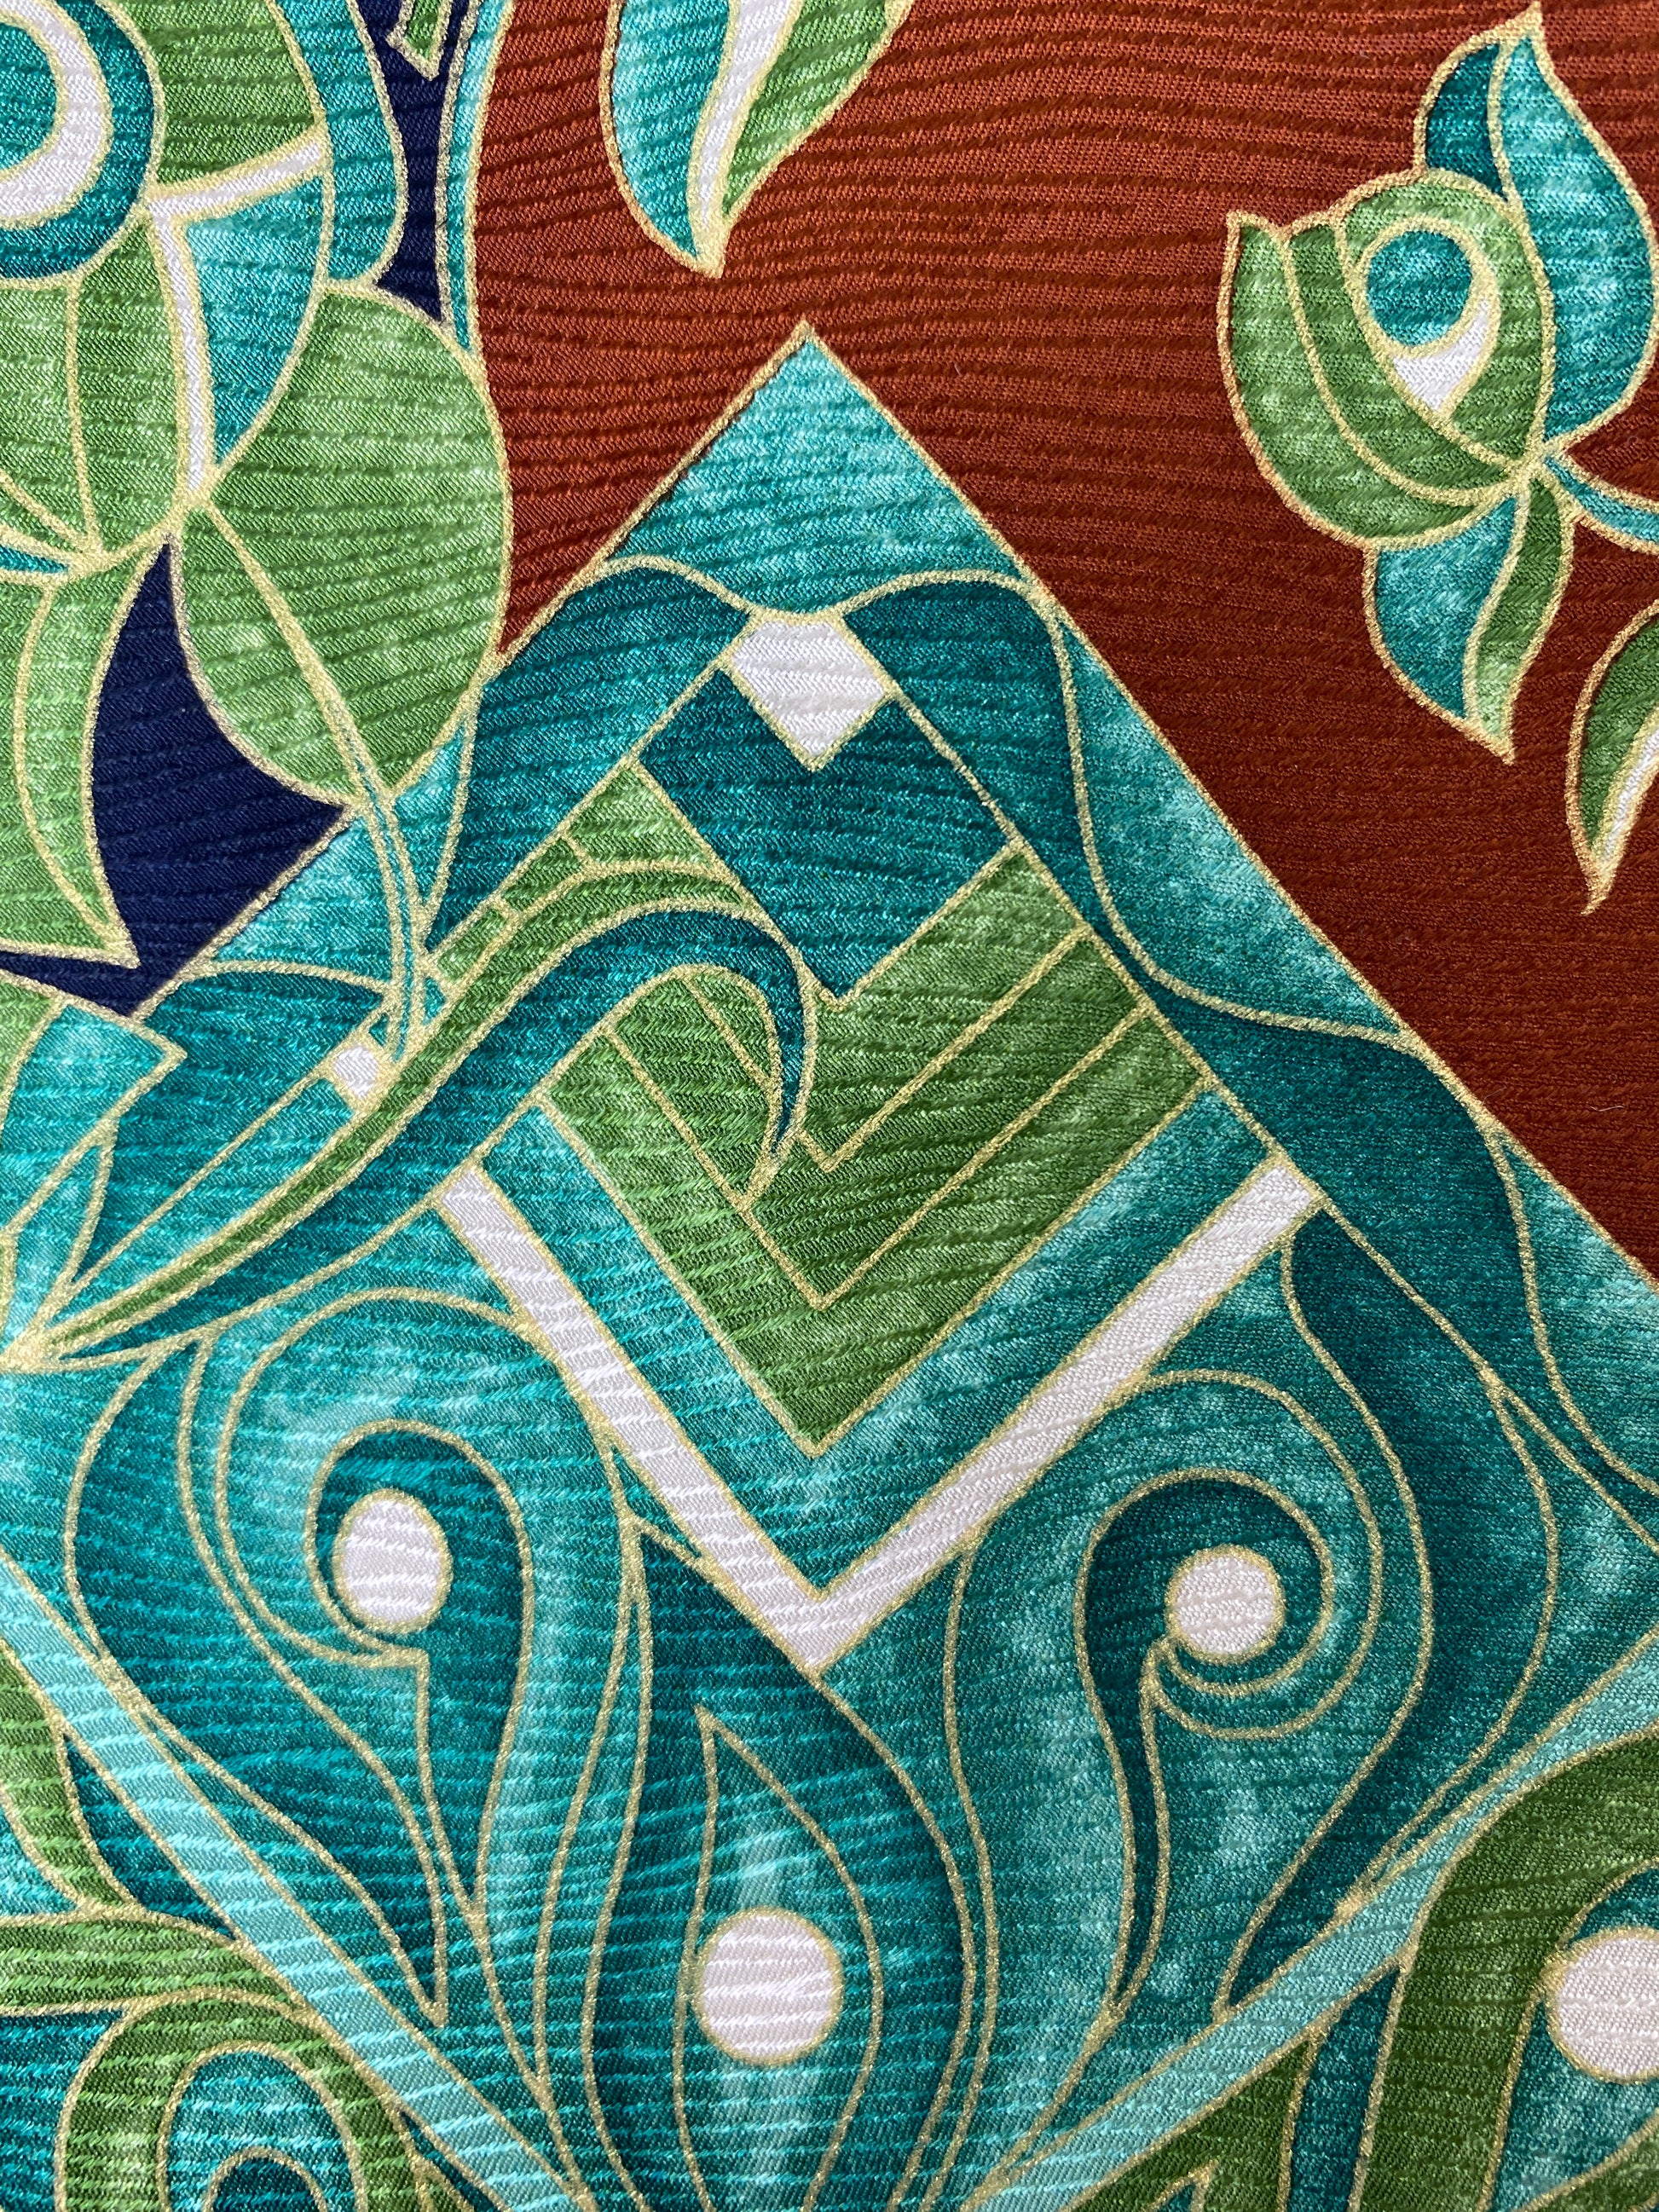 Close-up of: 90s Deadstock Silk Necktie, Men's Vintage Navy/ Green/ Brown Oriental Paisley Print Tie, NOS